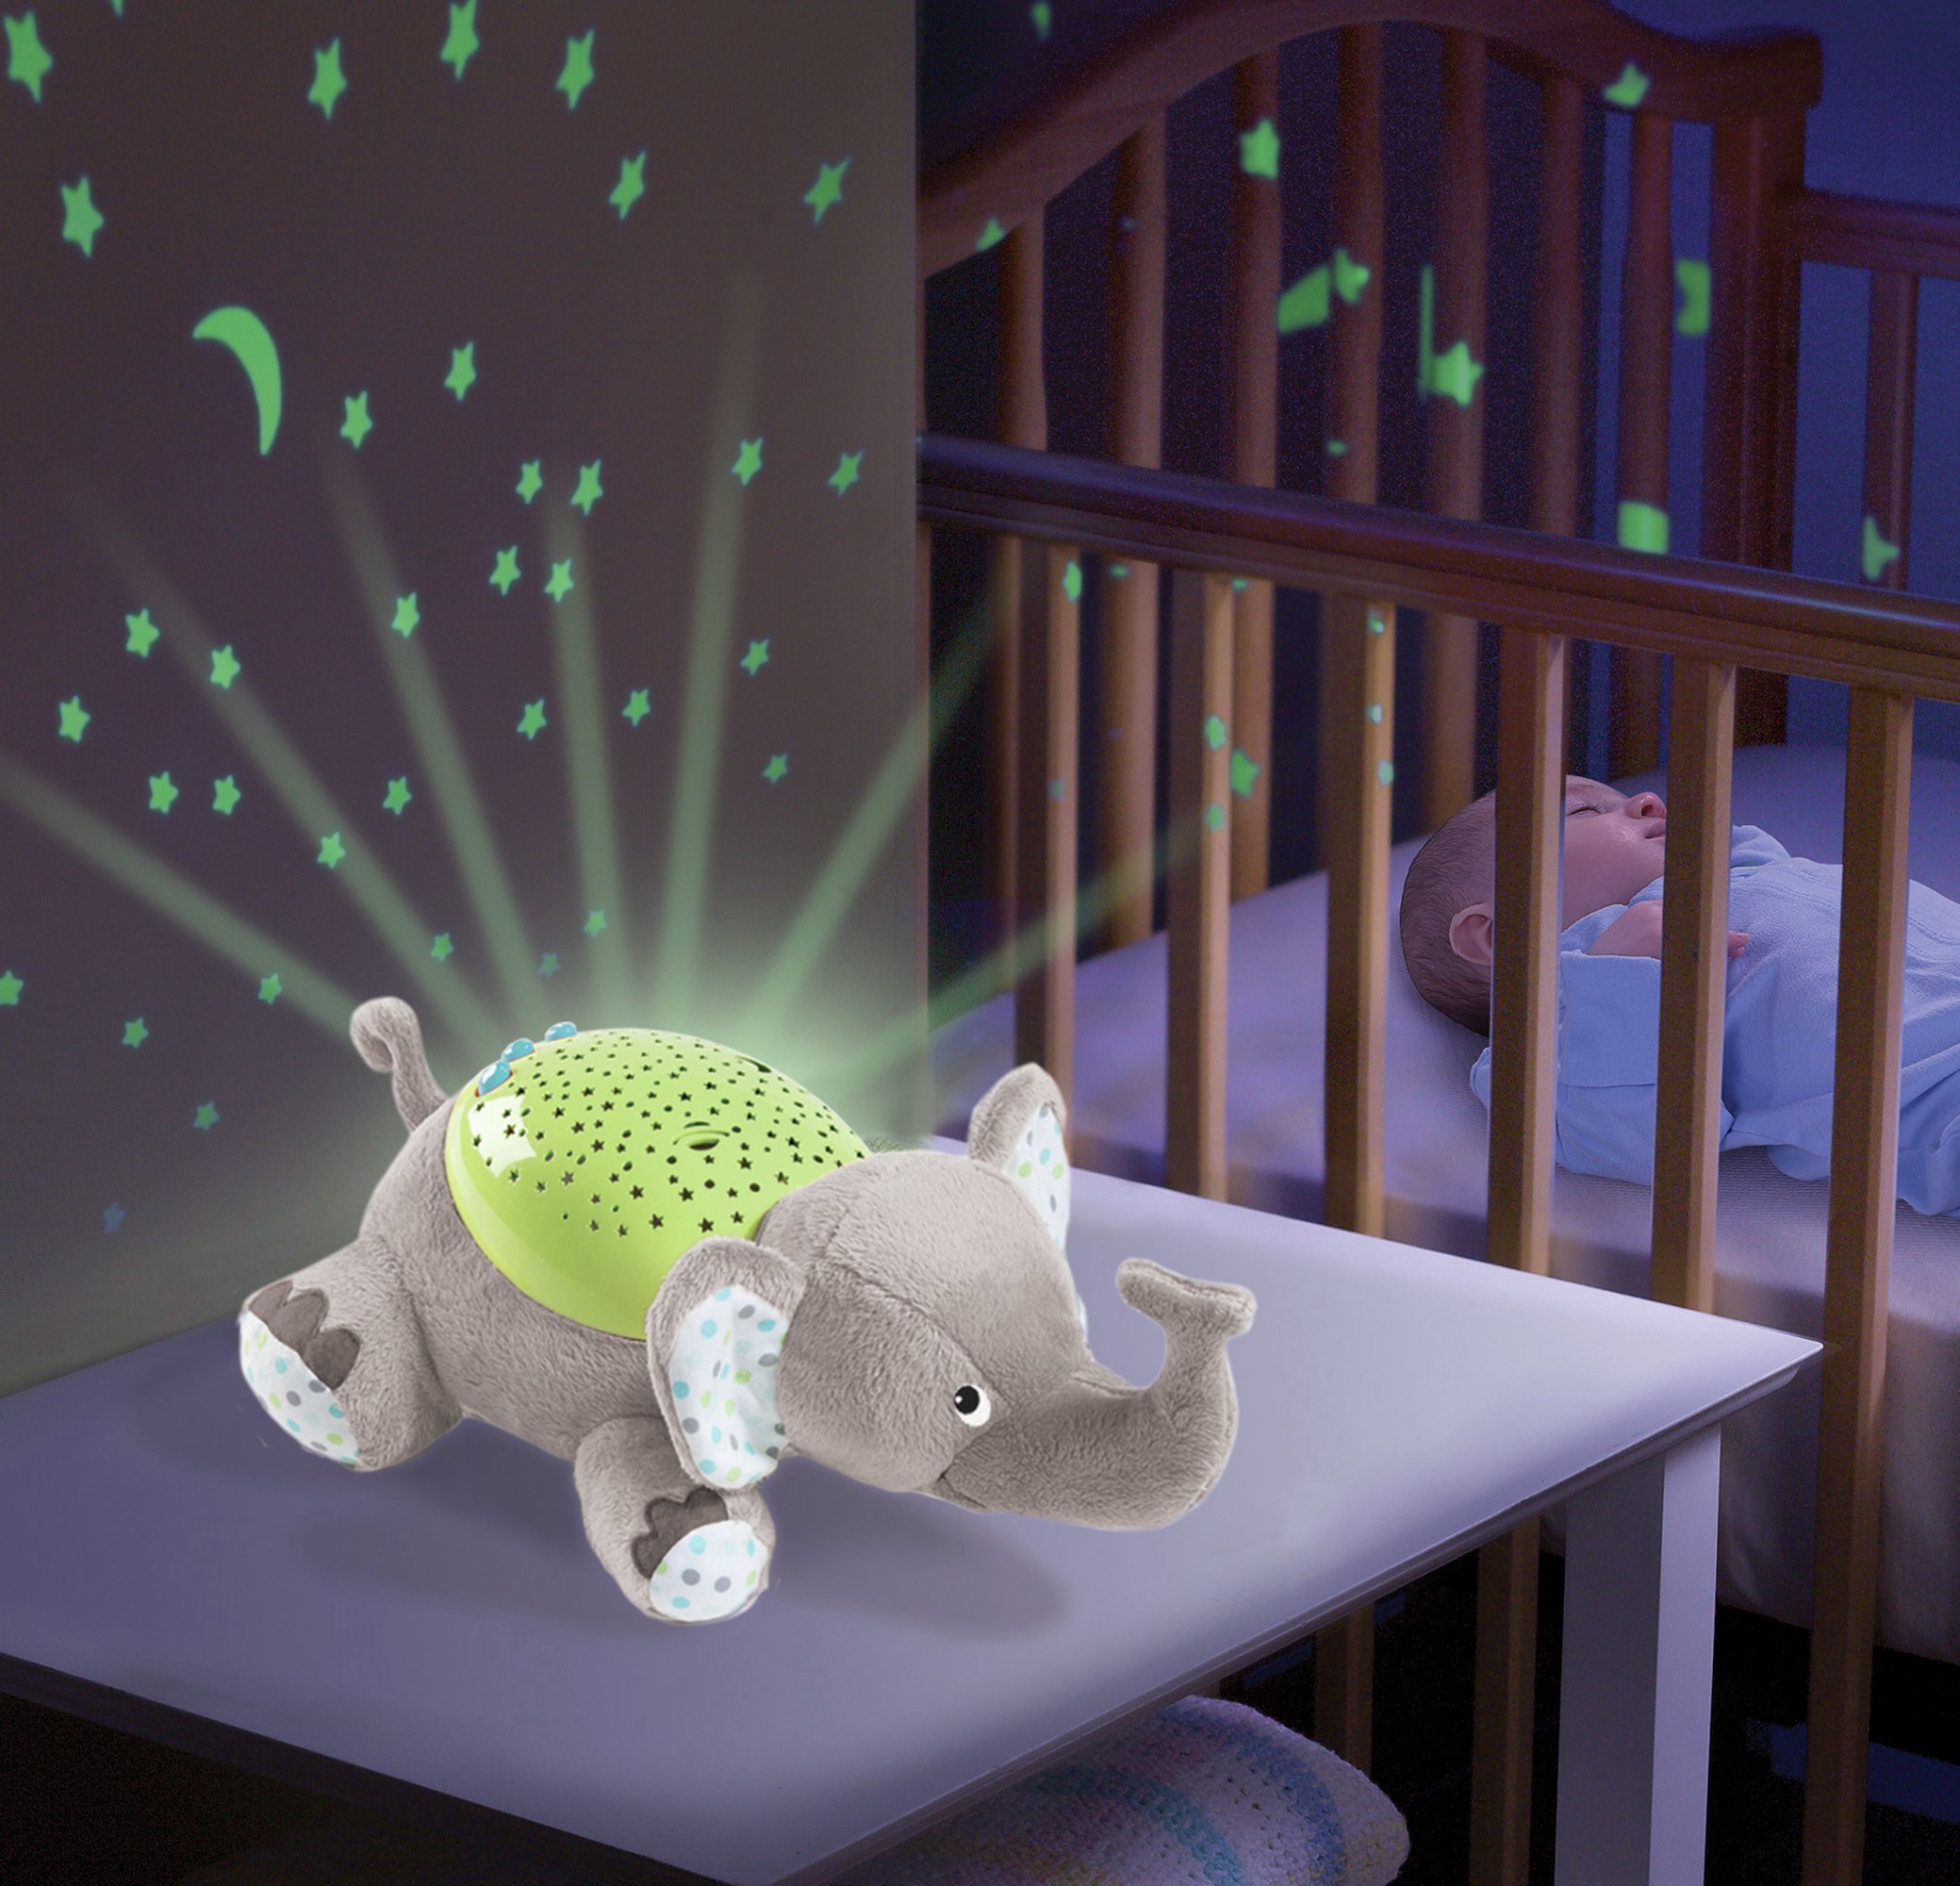 Summer Infant Slumber Buddies Classic Elephant Nightlight Review